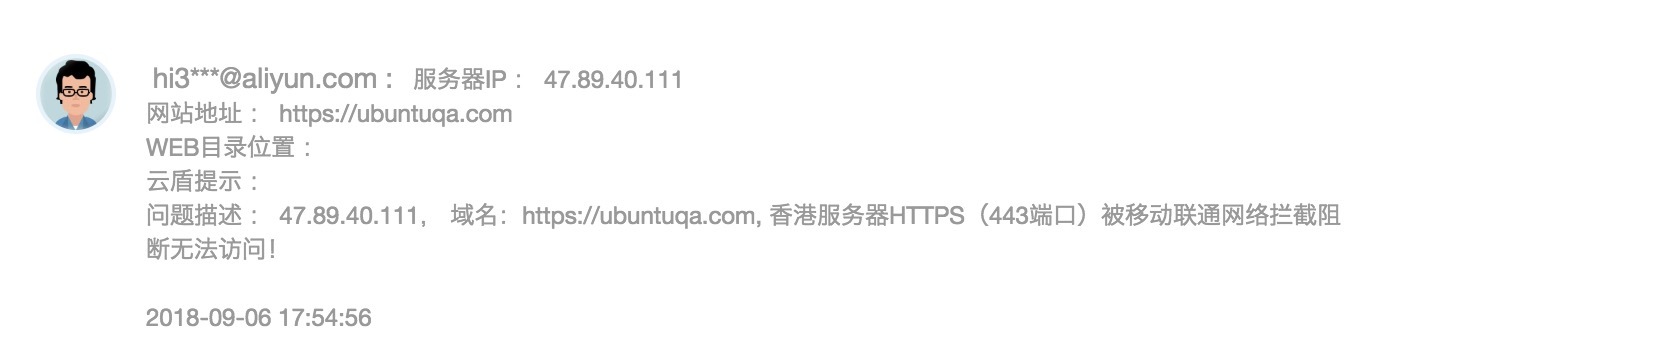 HTTPS 无法访问